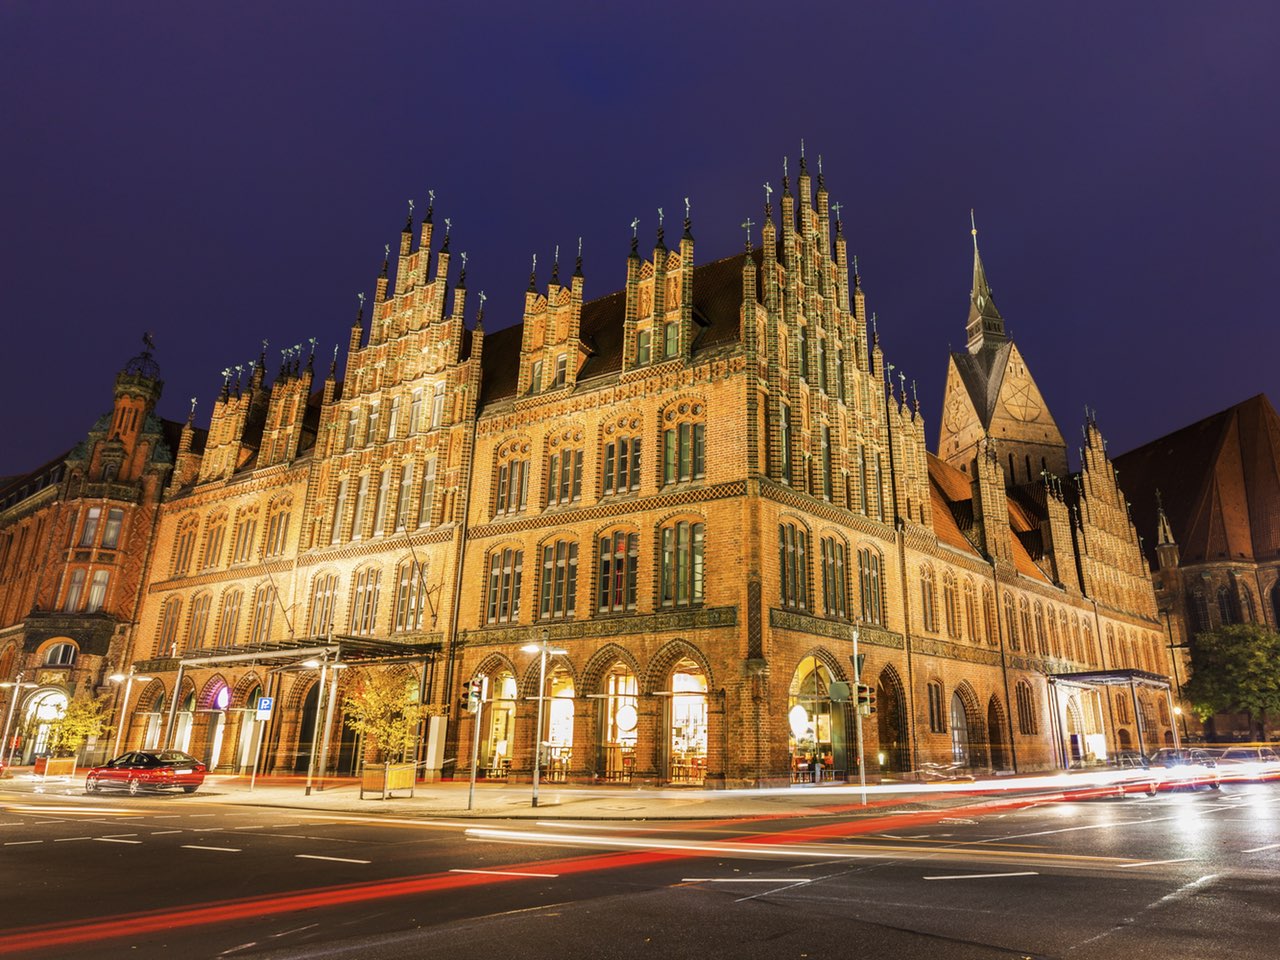 Das Alte Rathaus Hannovers am Abend.